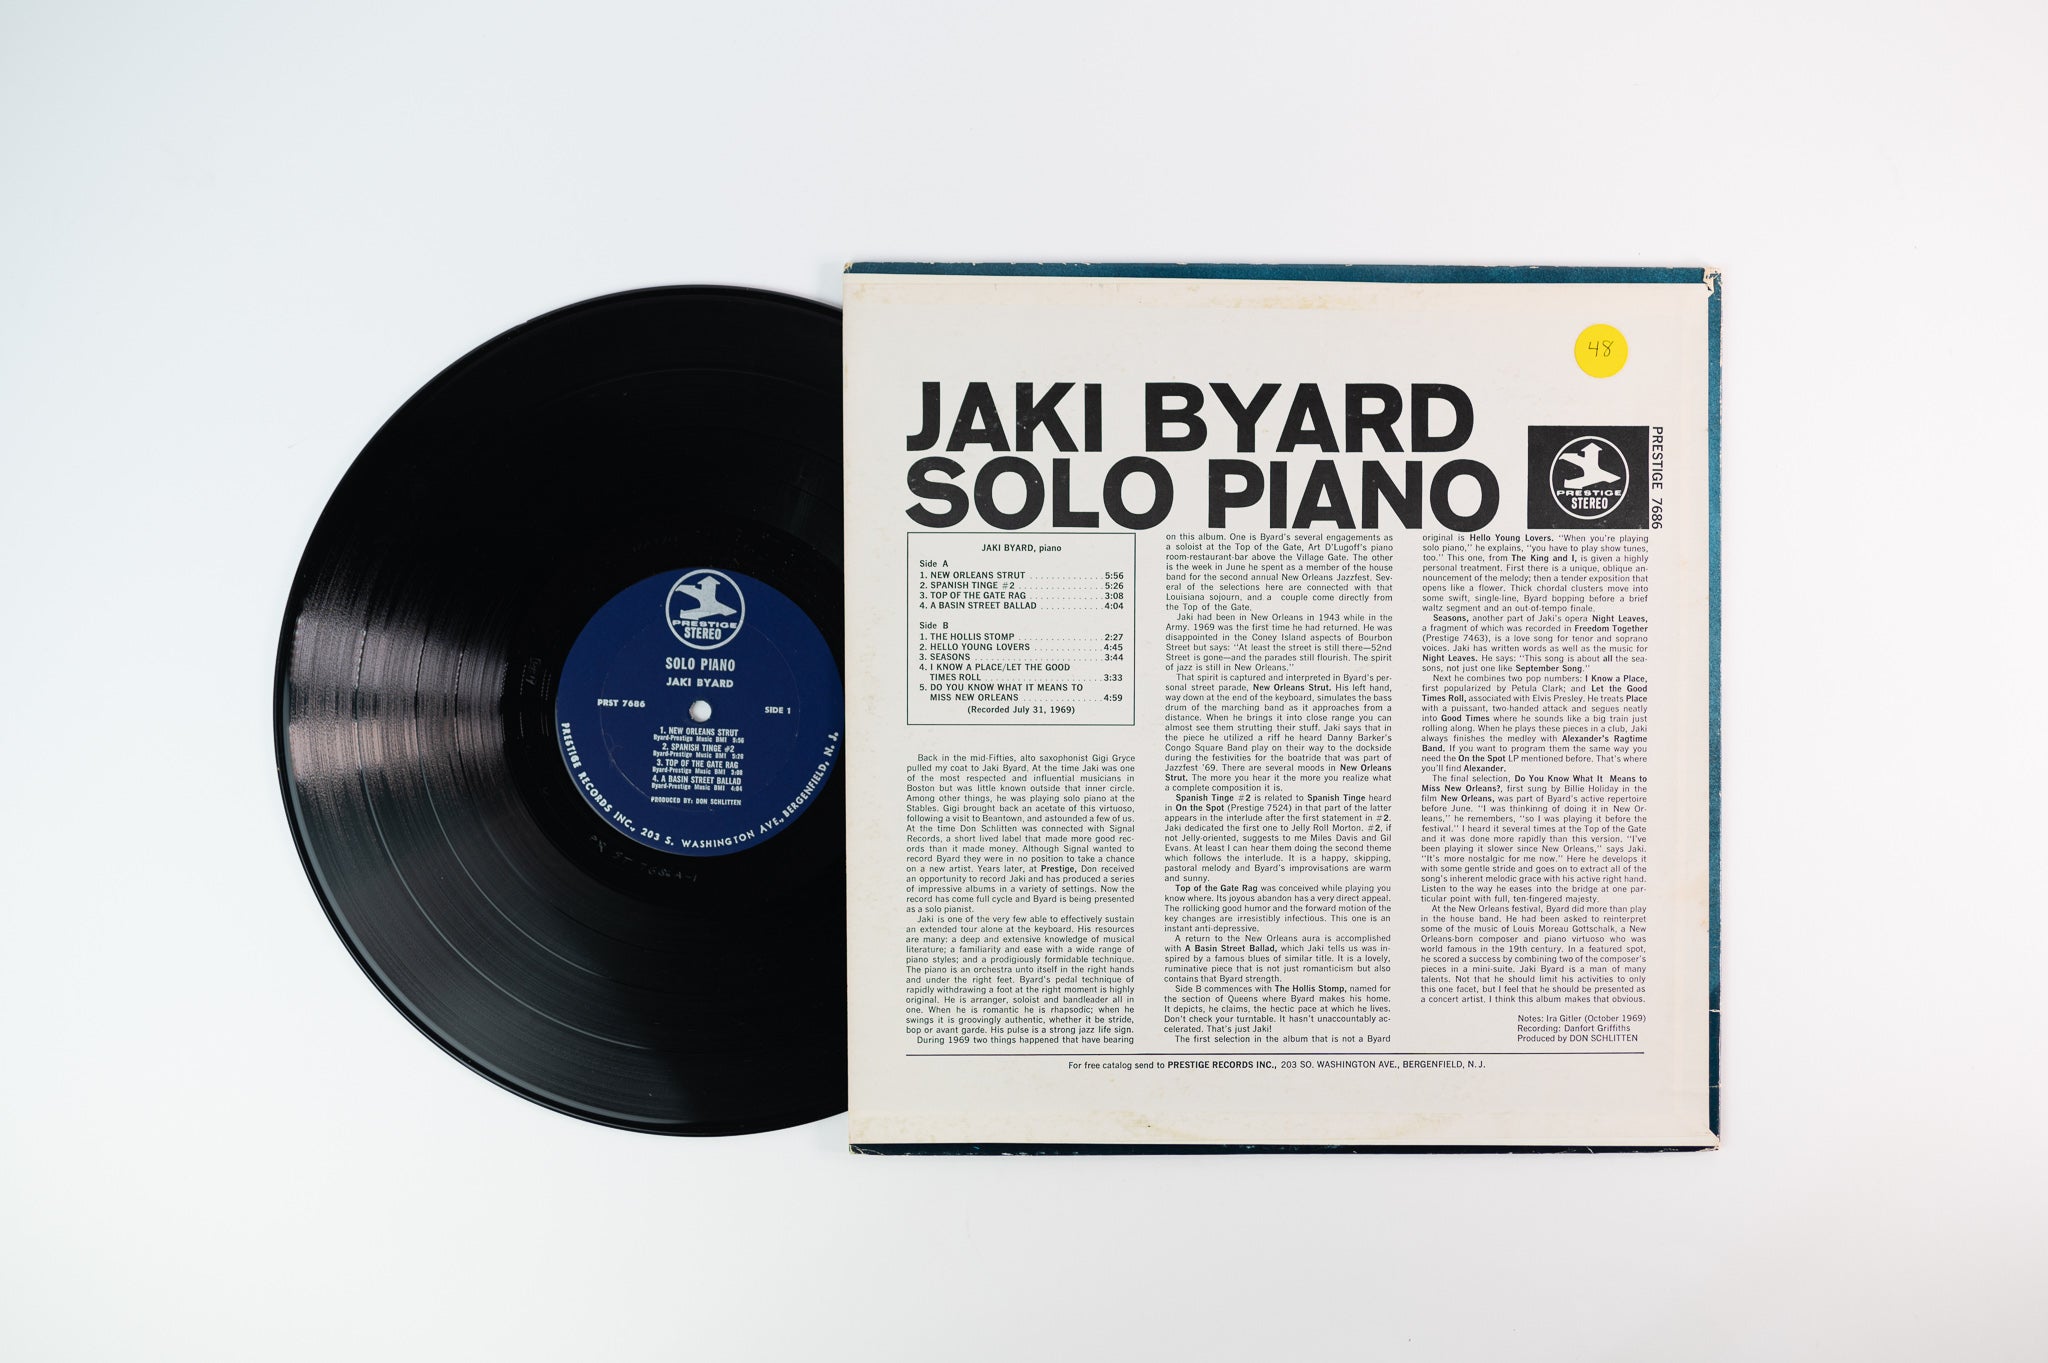 Jaki Byard - Solo Piano on Prestige 7686 Stereo